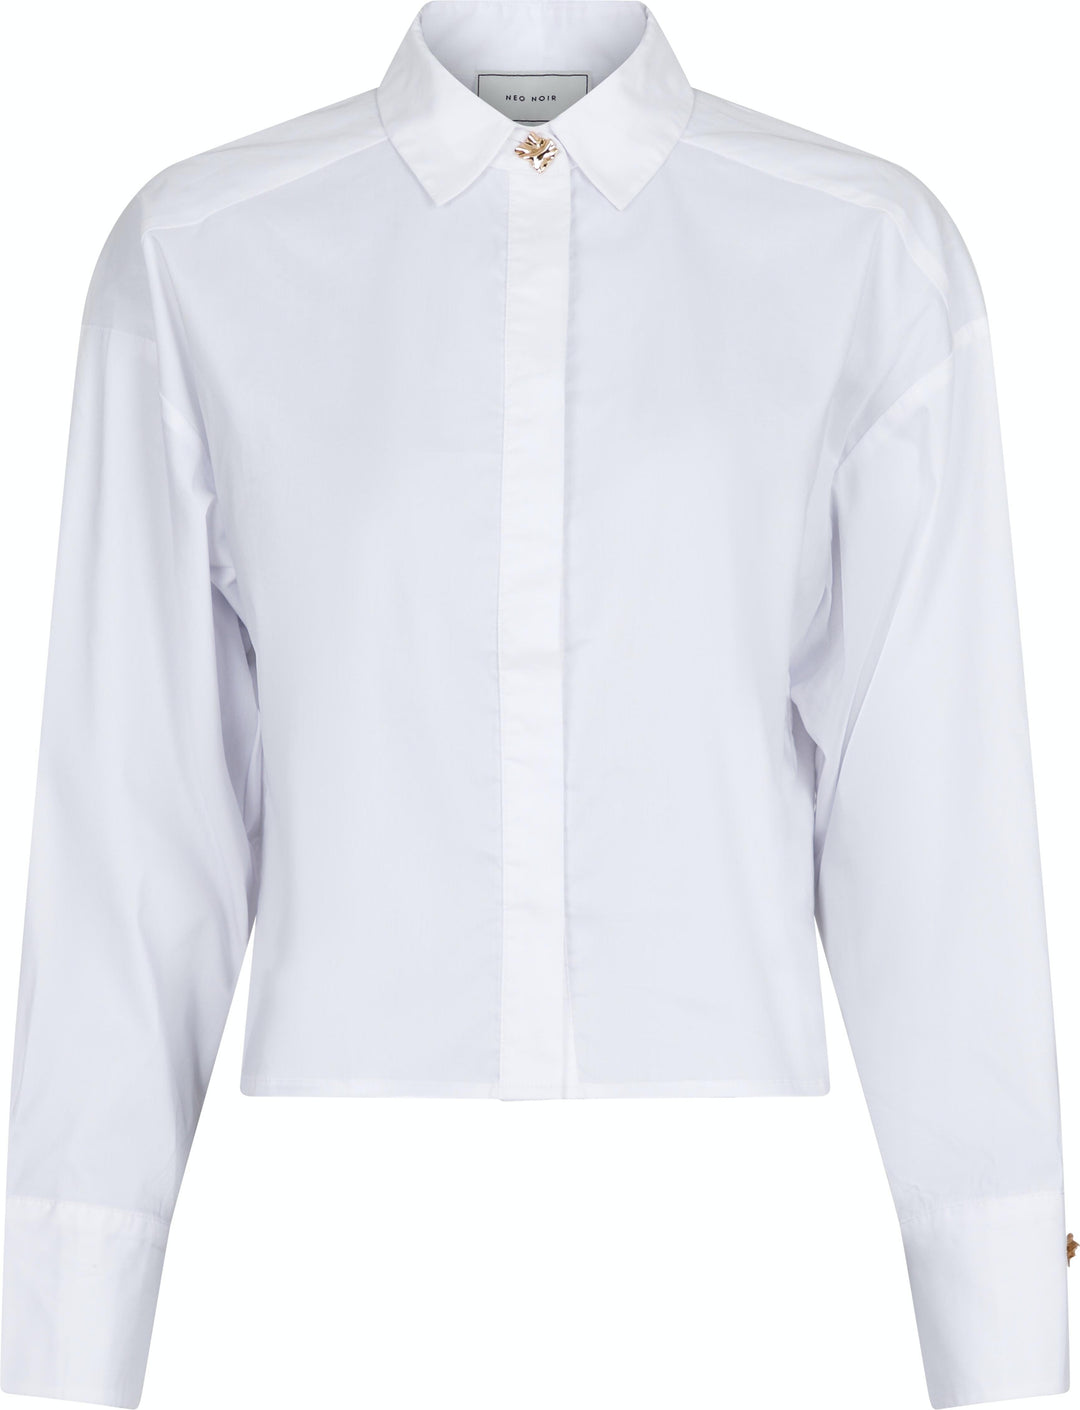 Neo Noir - Wisla Poplin Shirt - White